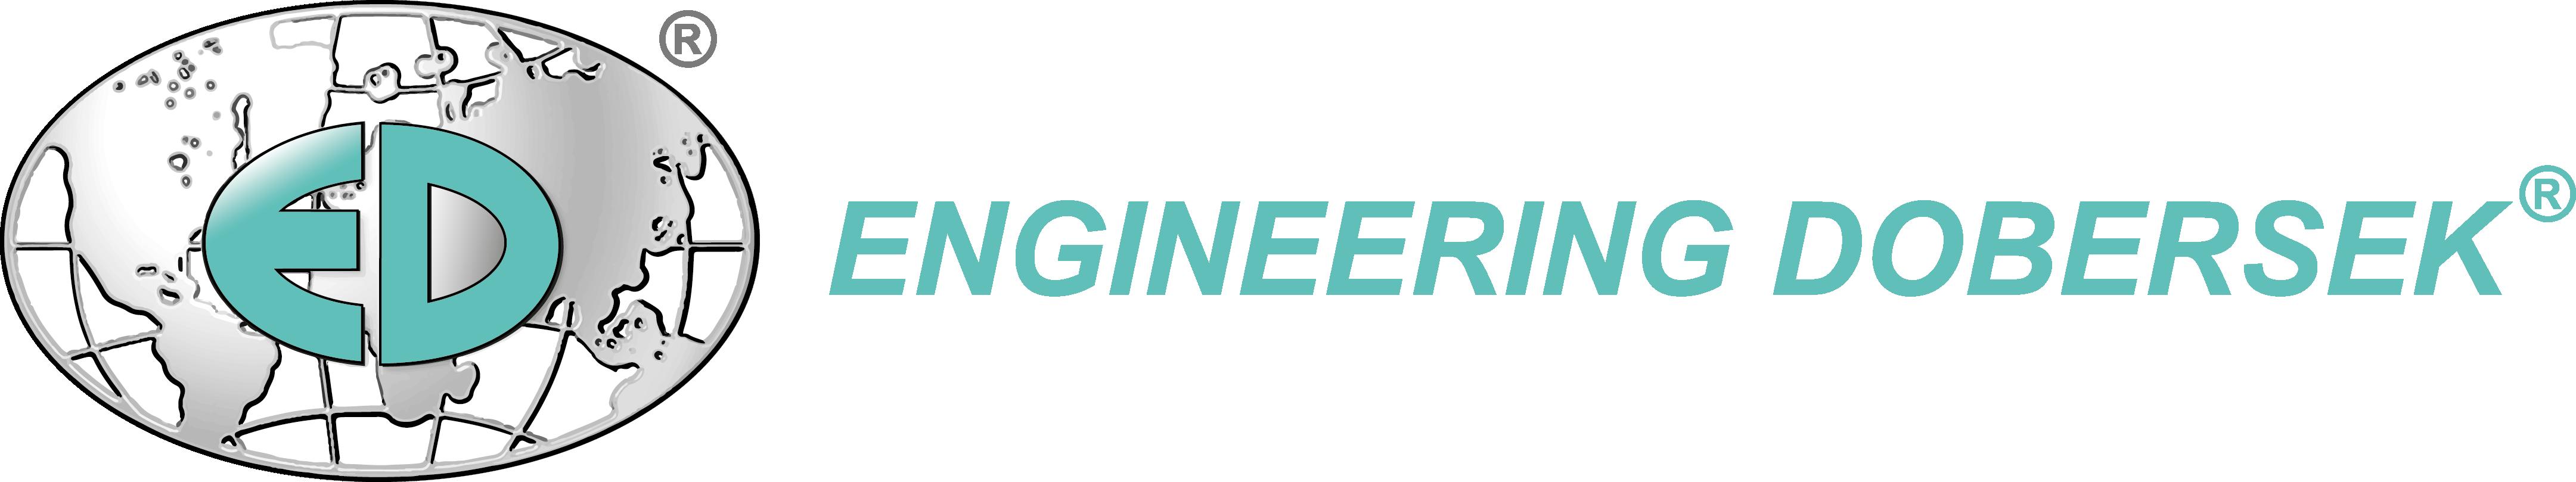 ENGINEERING DOBERSEK GmbH Logo